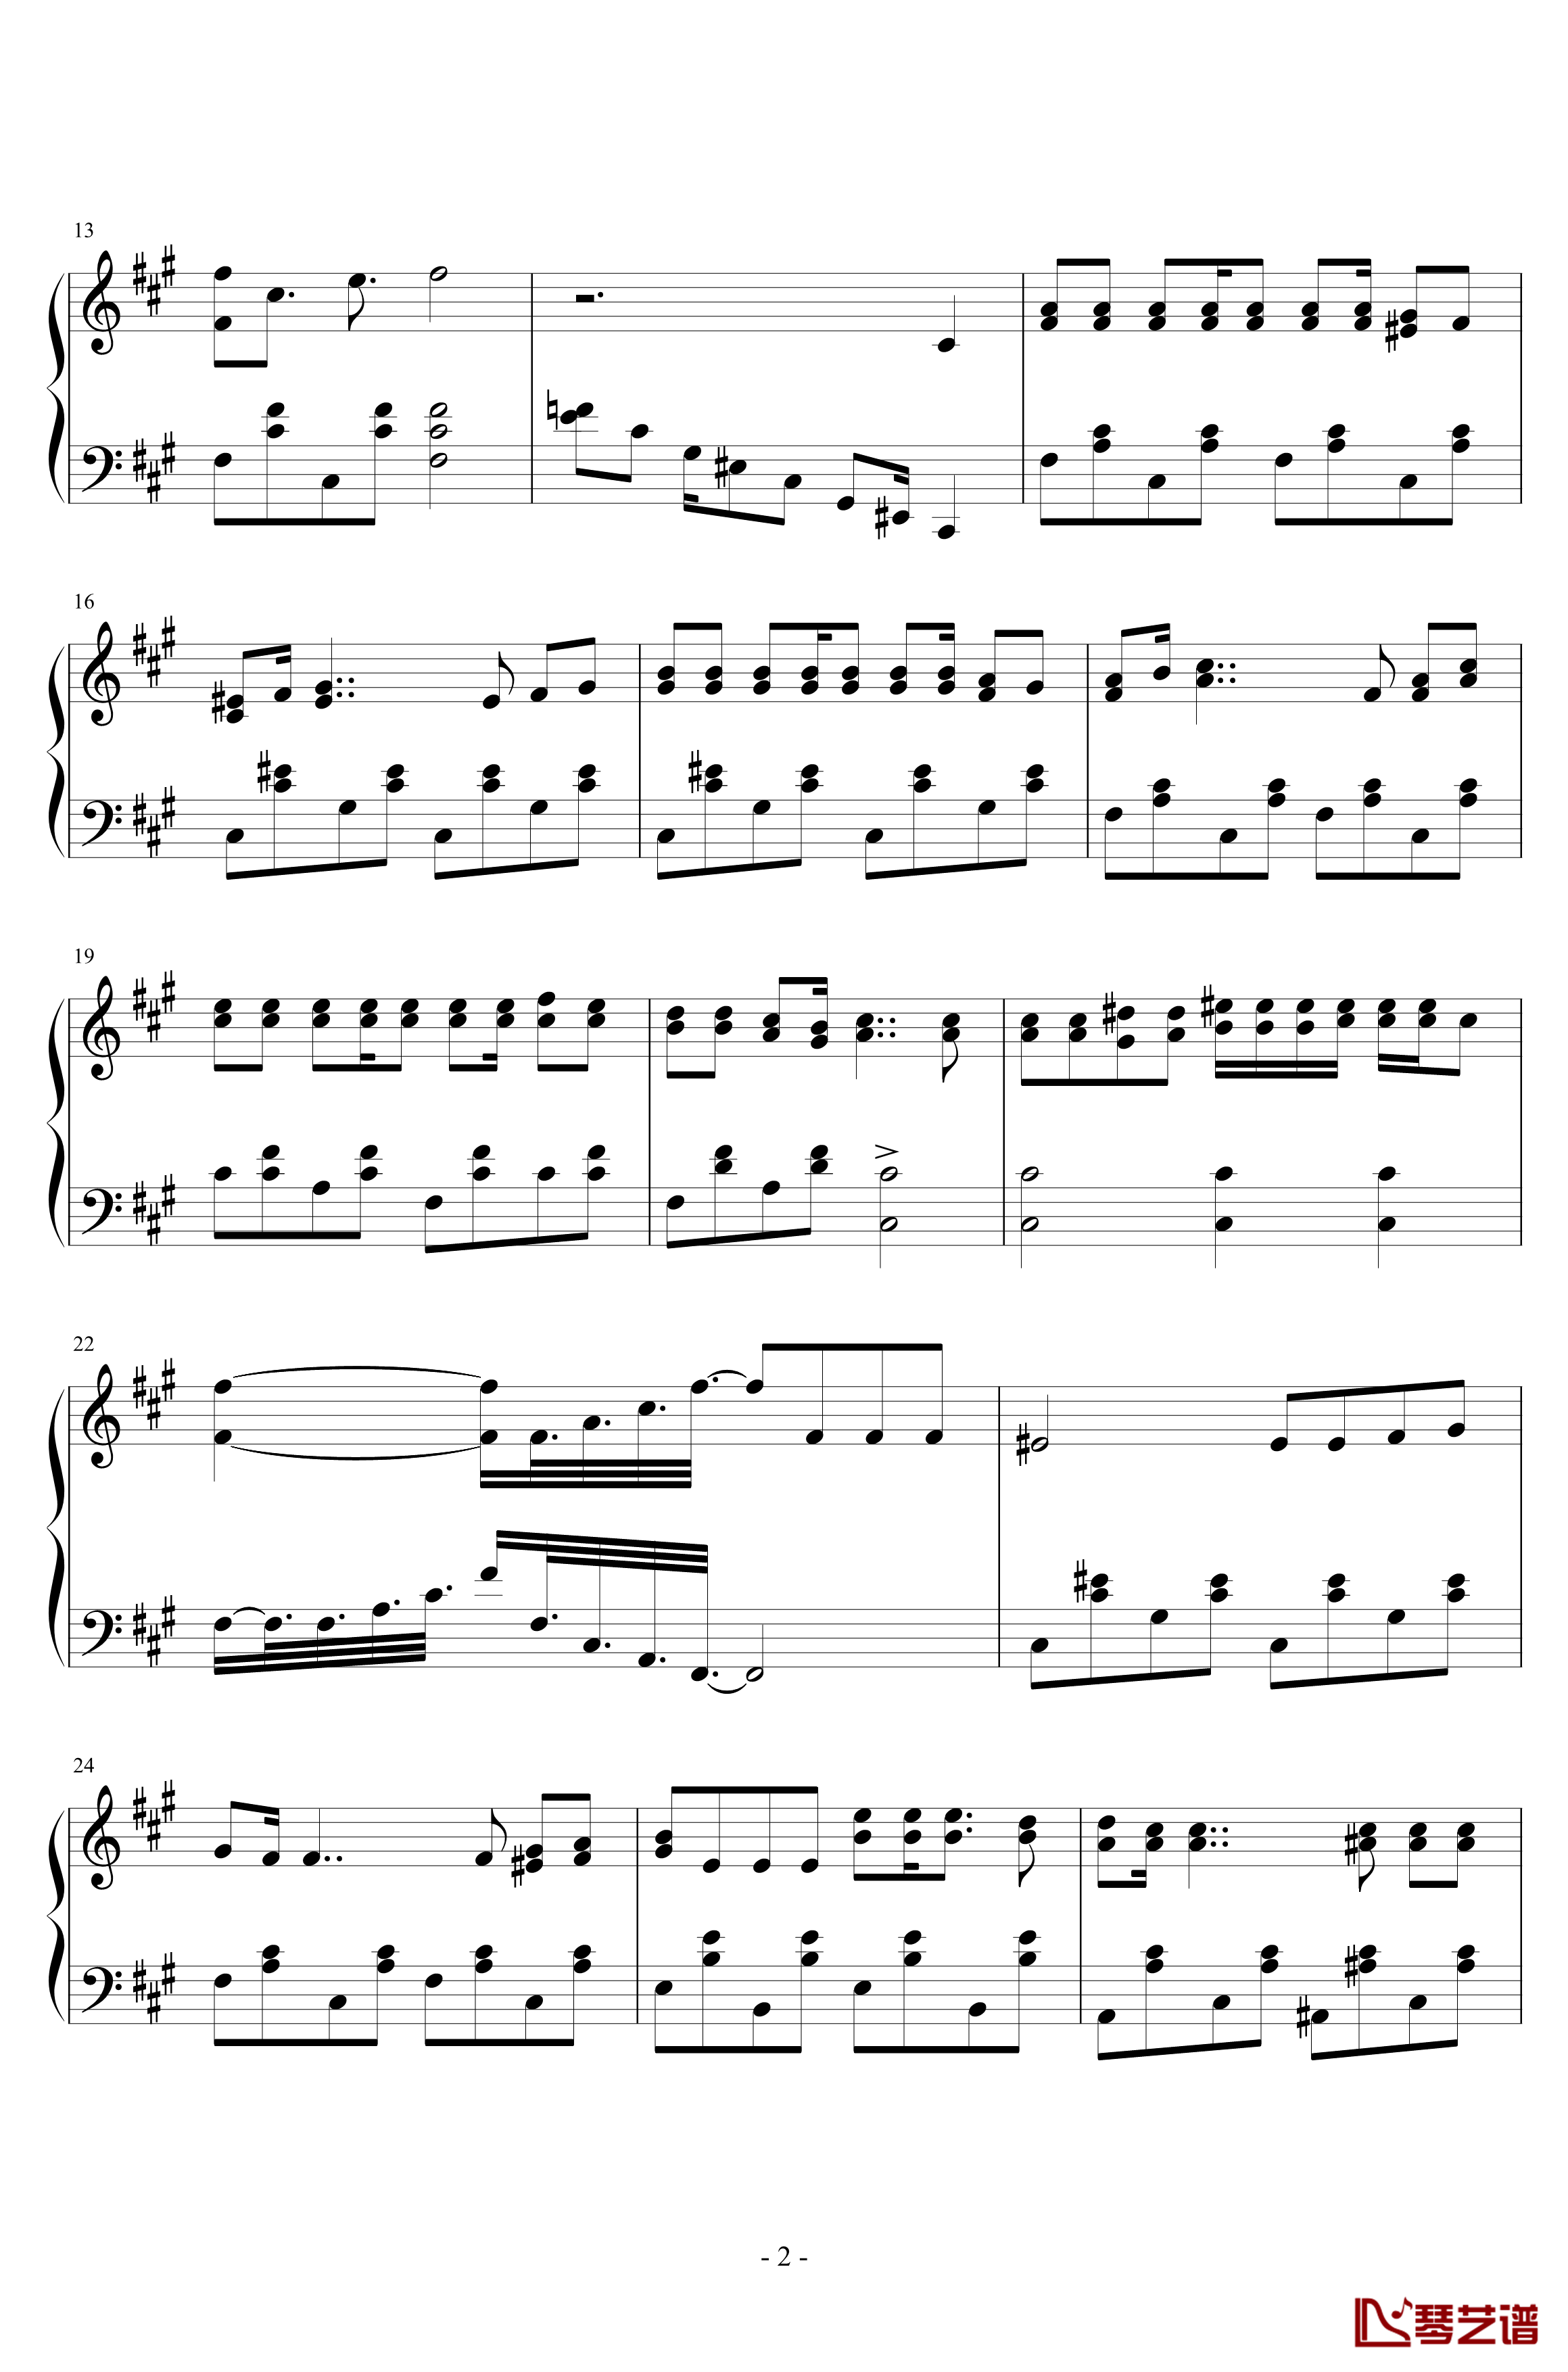 SNOBBISM钢琴谱 -Neru2